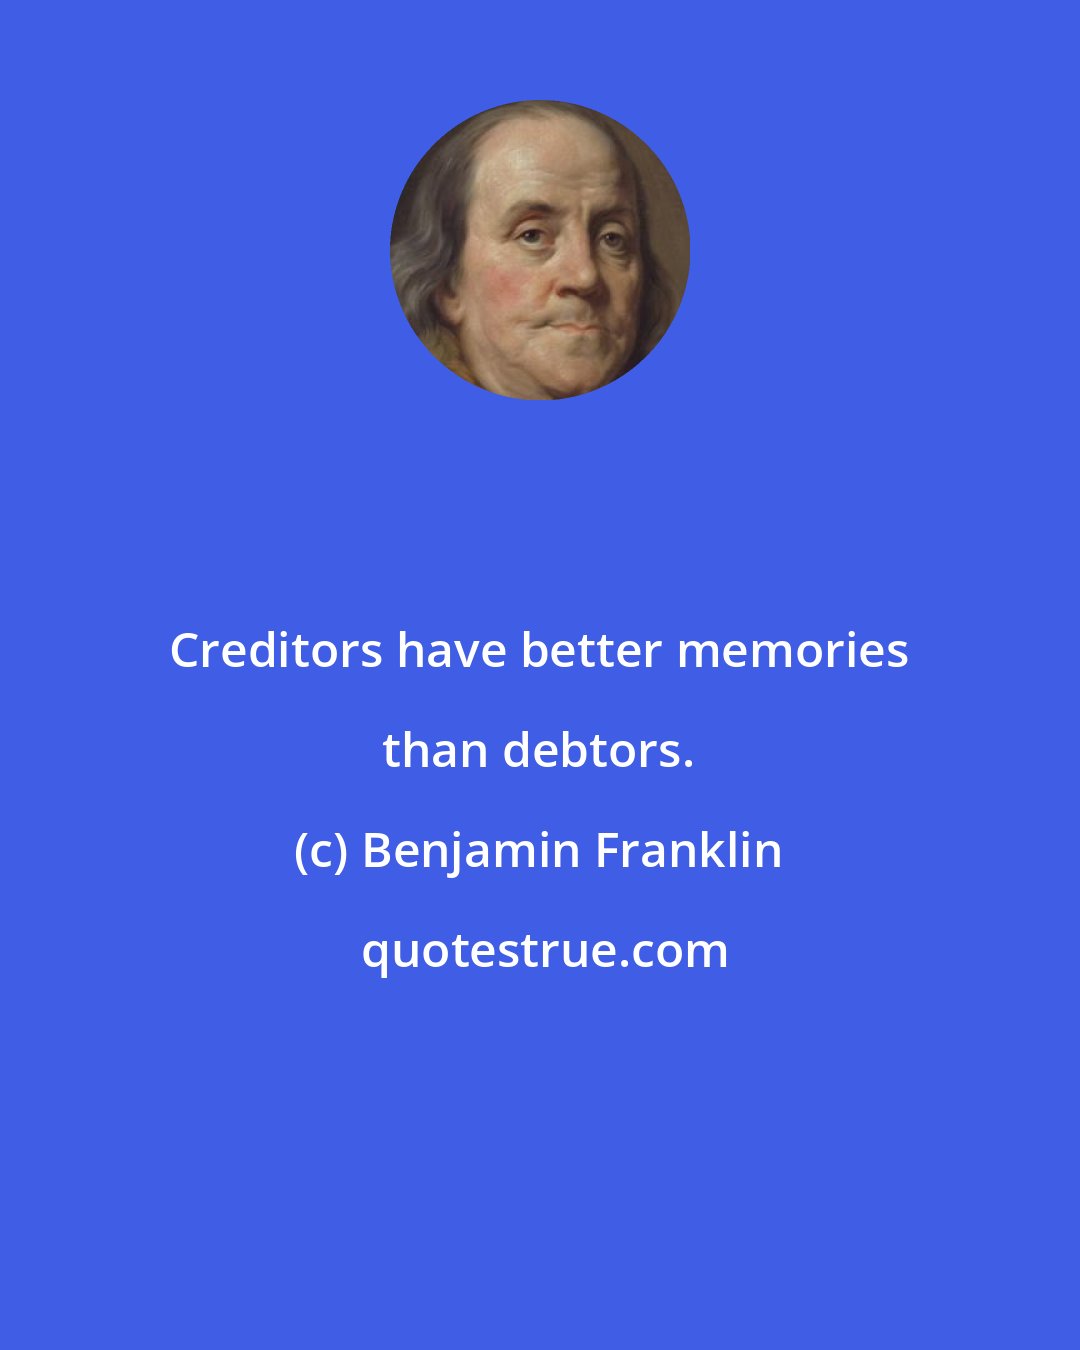 Benjamin Franklin: Creditors have better memories than debtors.